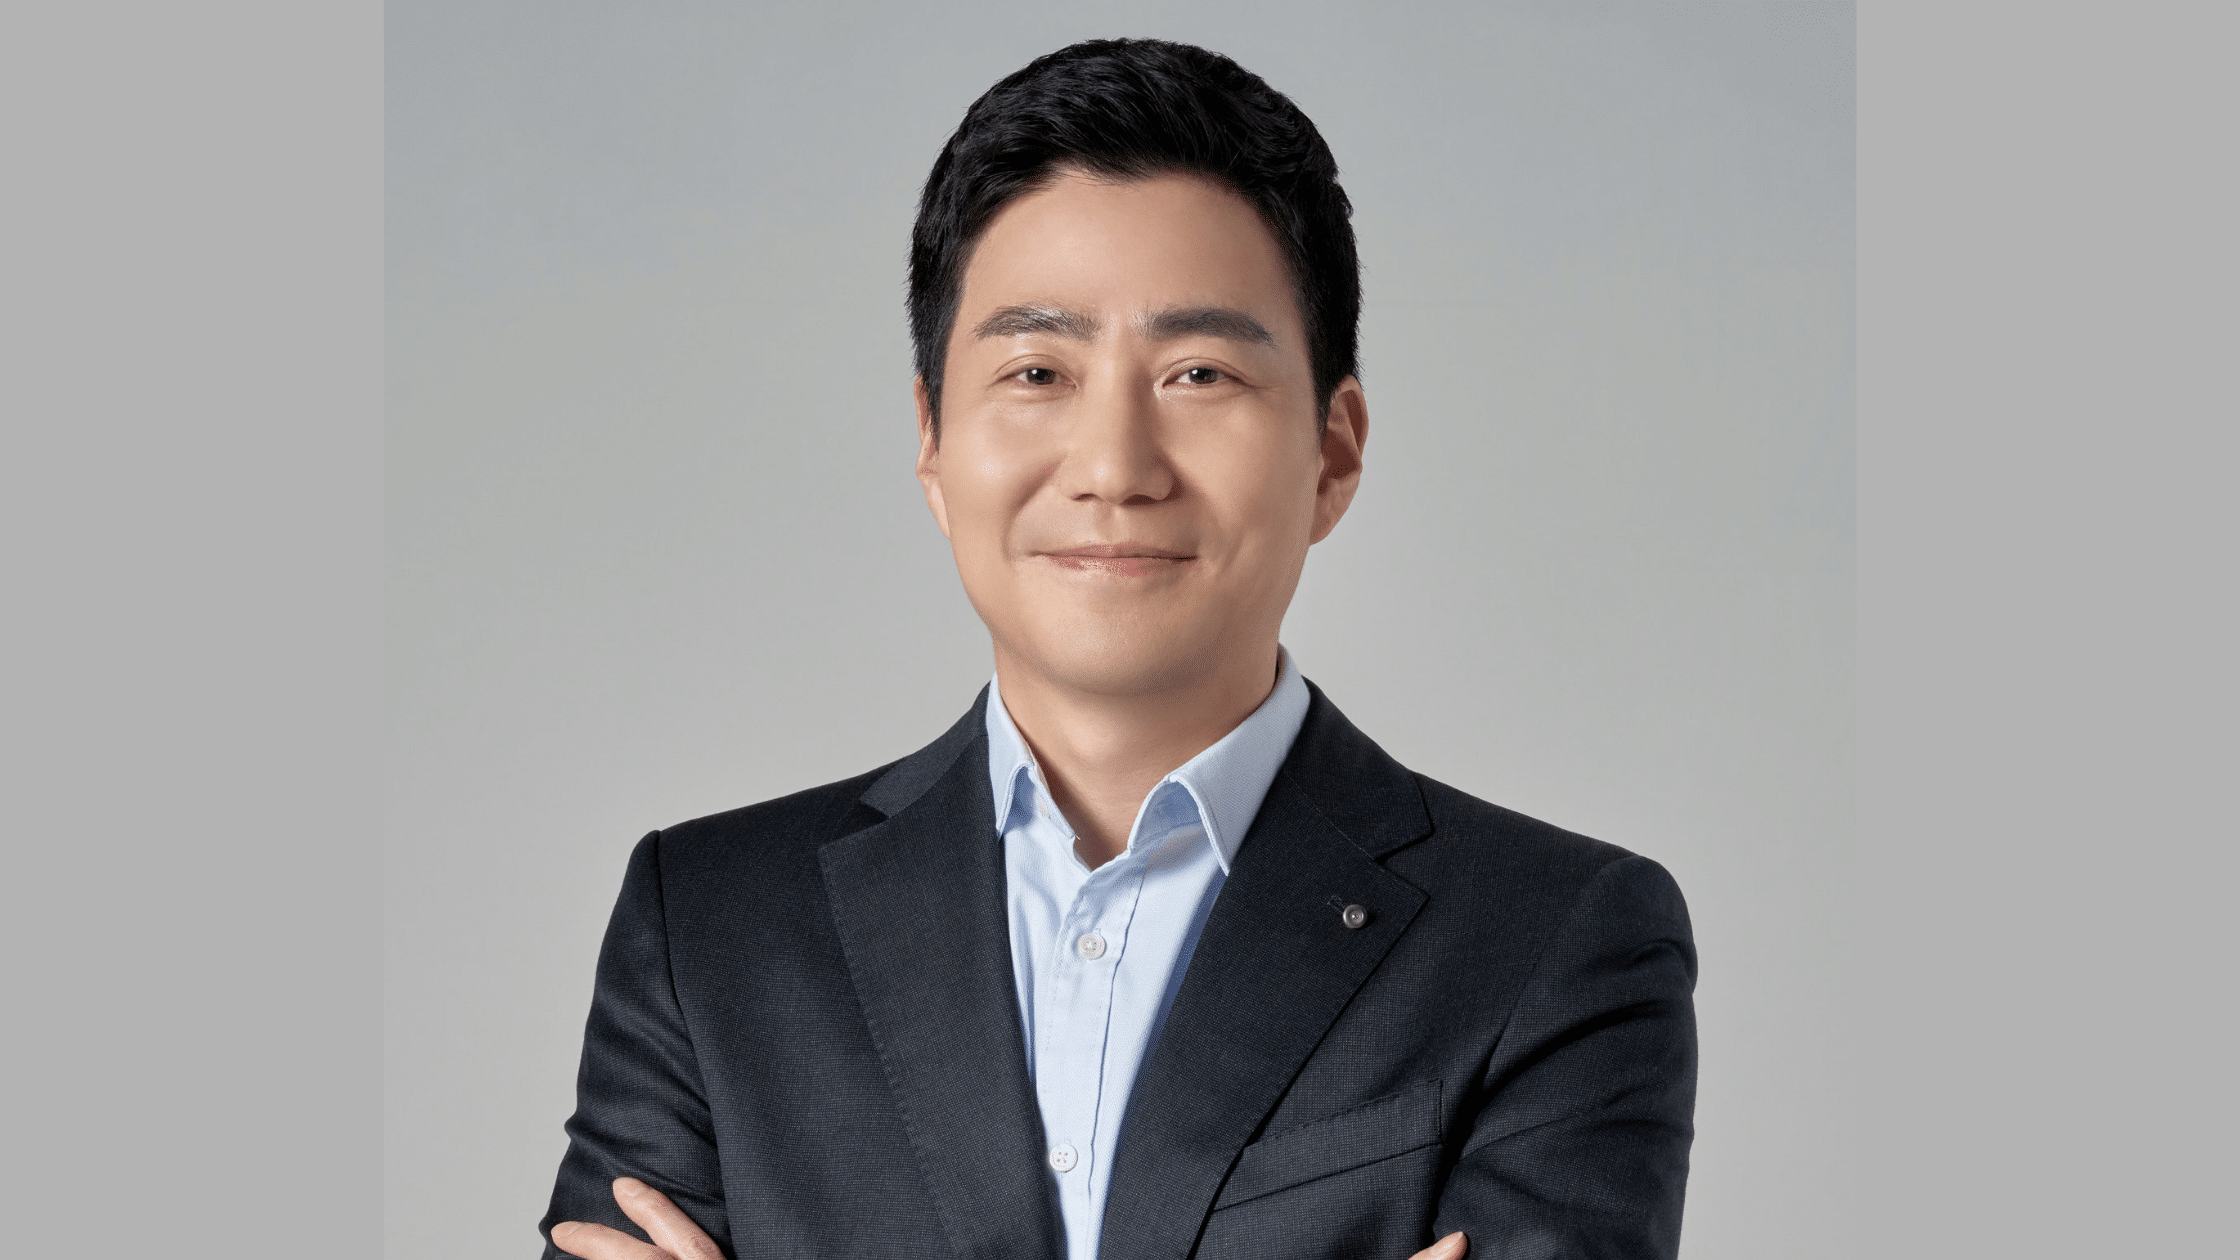 Dean Kim will head new StradVision German office